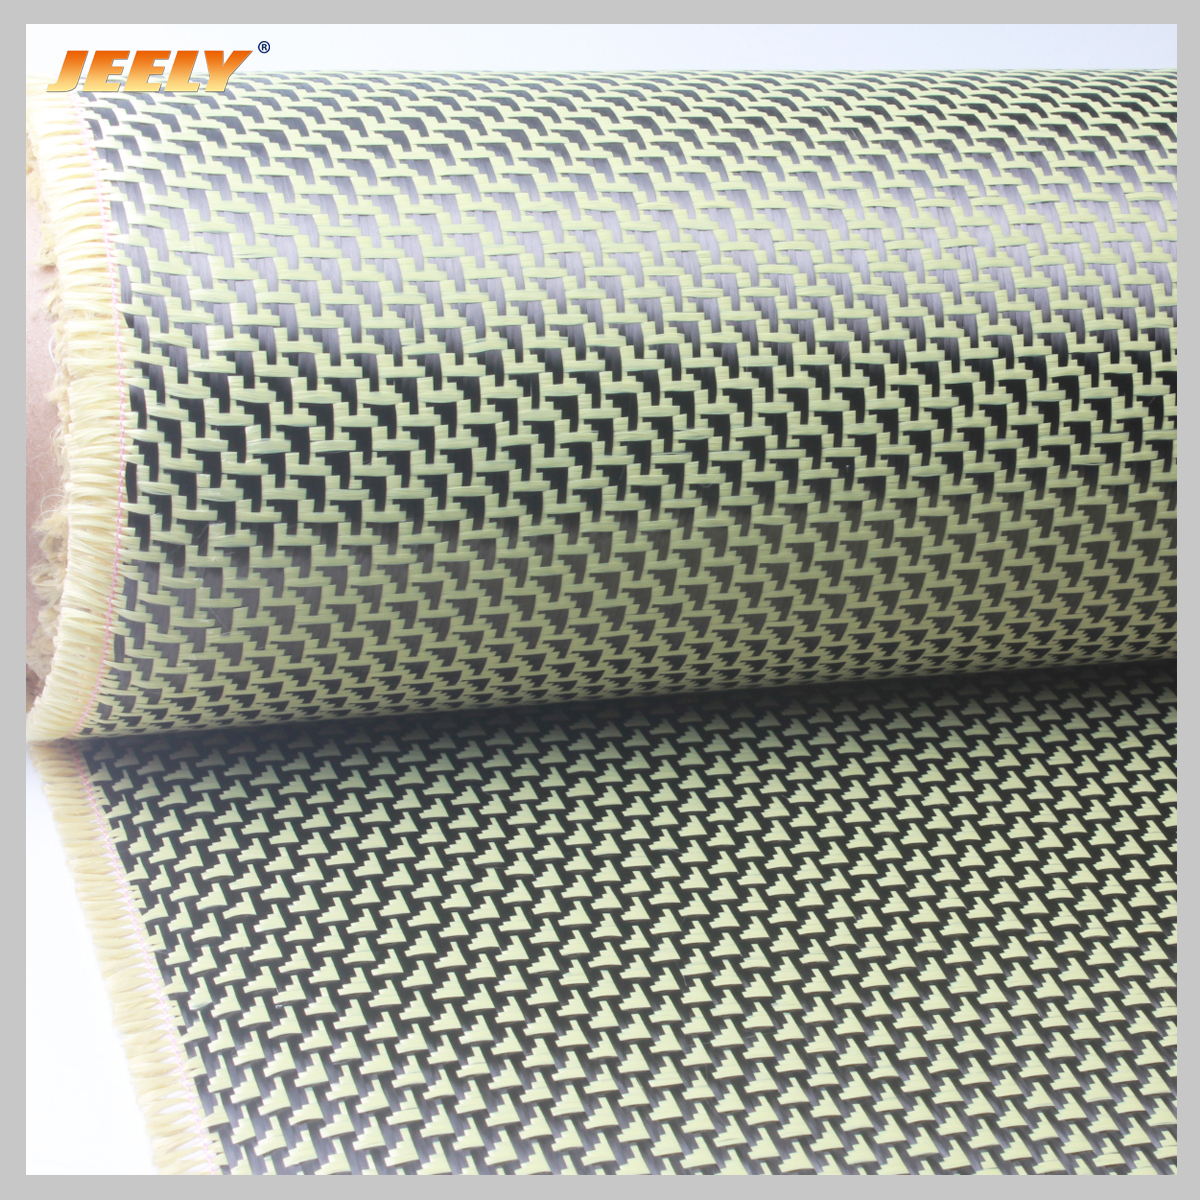 Surface Coating 3K 260gsm Carbon Fiber with 1500D aramid Woven Reinforce Cloth Plain Pattern